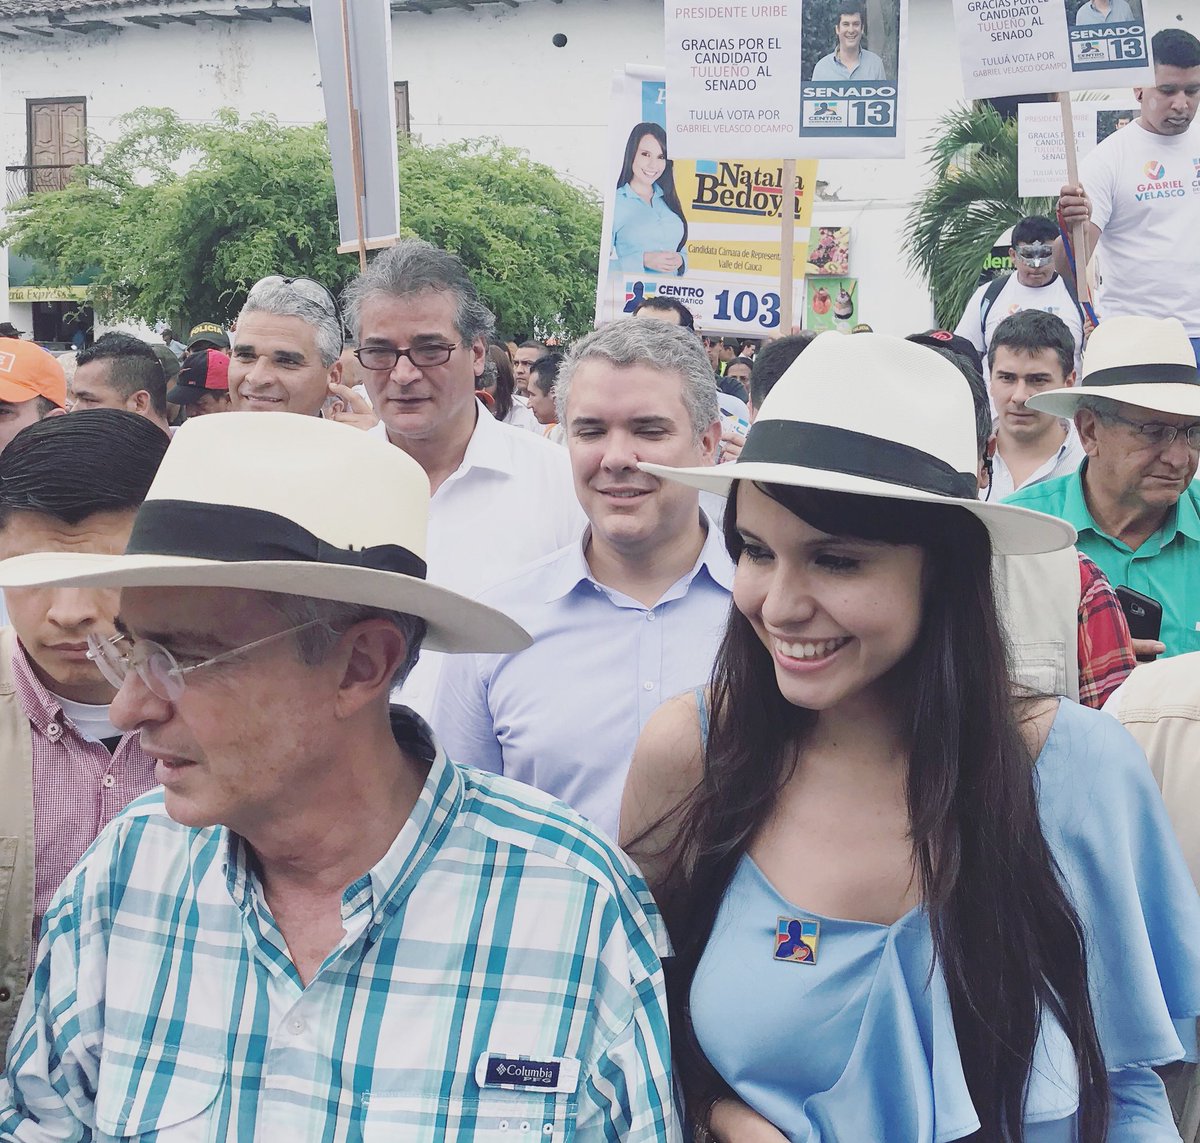 Natalia Bedoya en Twitter: "Álvaro Uribe Senado #1 Natalia Bedoya Cámara de  Representantes #103 Valle del Cauca… "